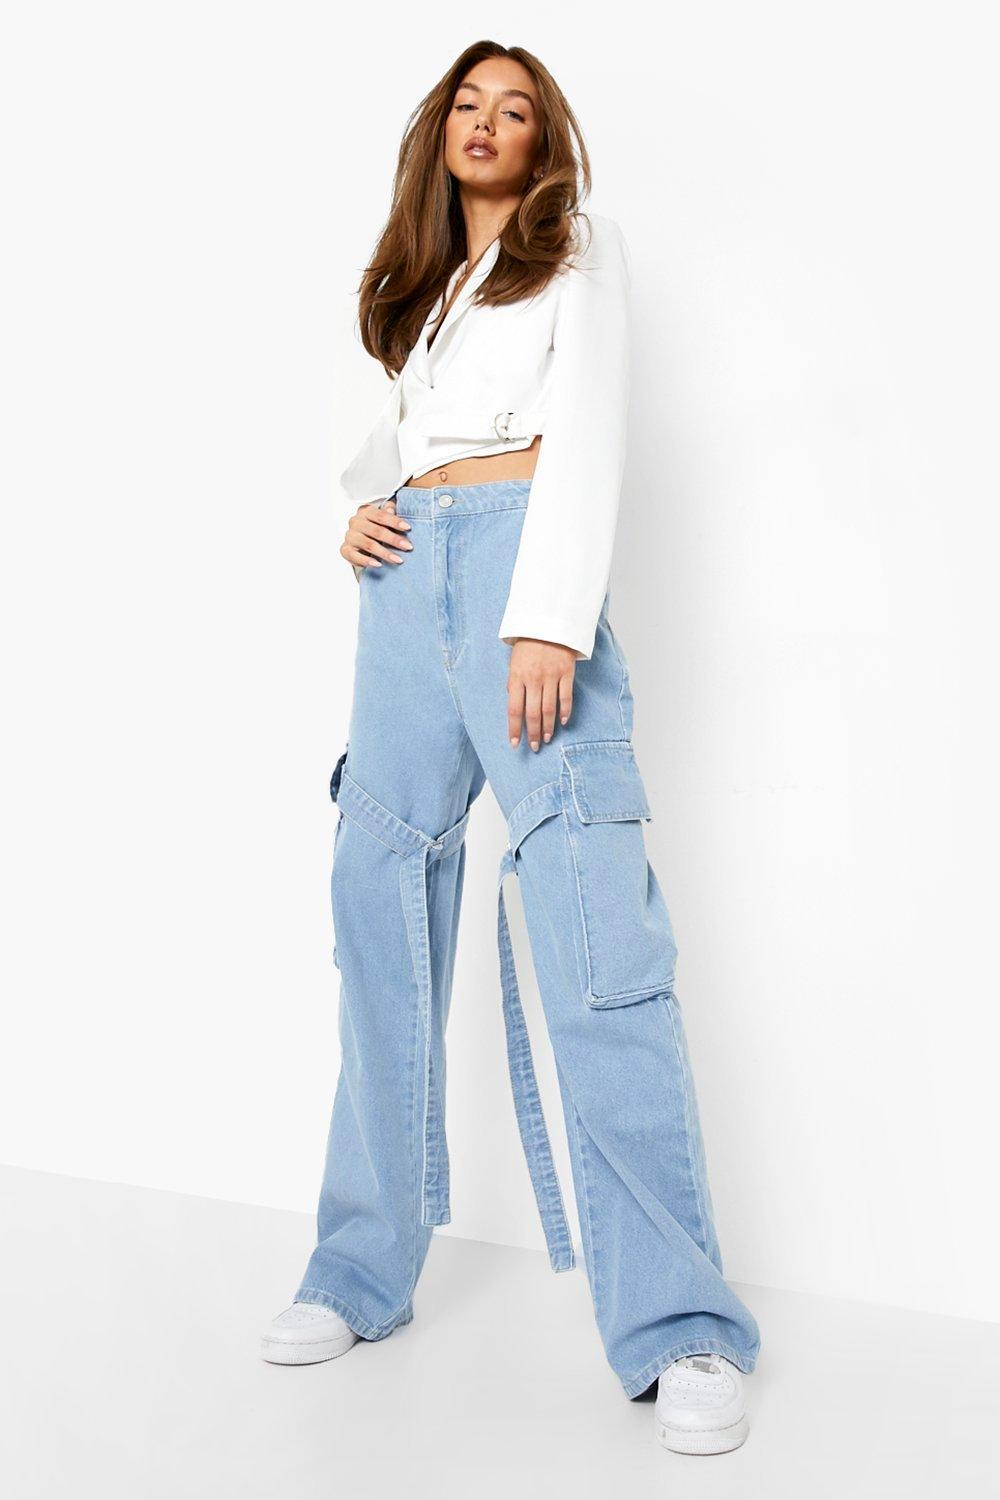 https://media.boohoo.com/i/boohoo/gzz04457_light%20blue_xl_3/female-light%20blue-cargo-relaxed-fit-jeans